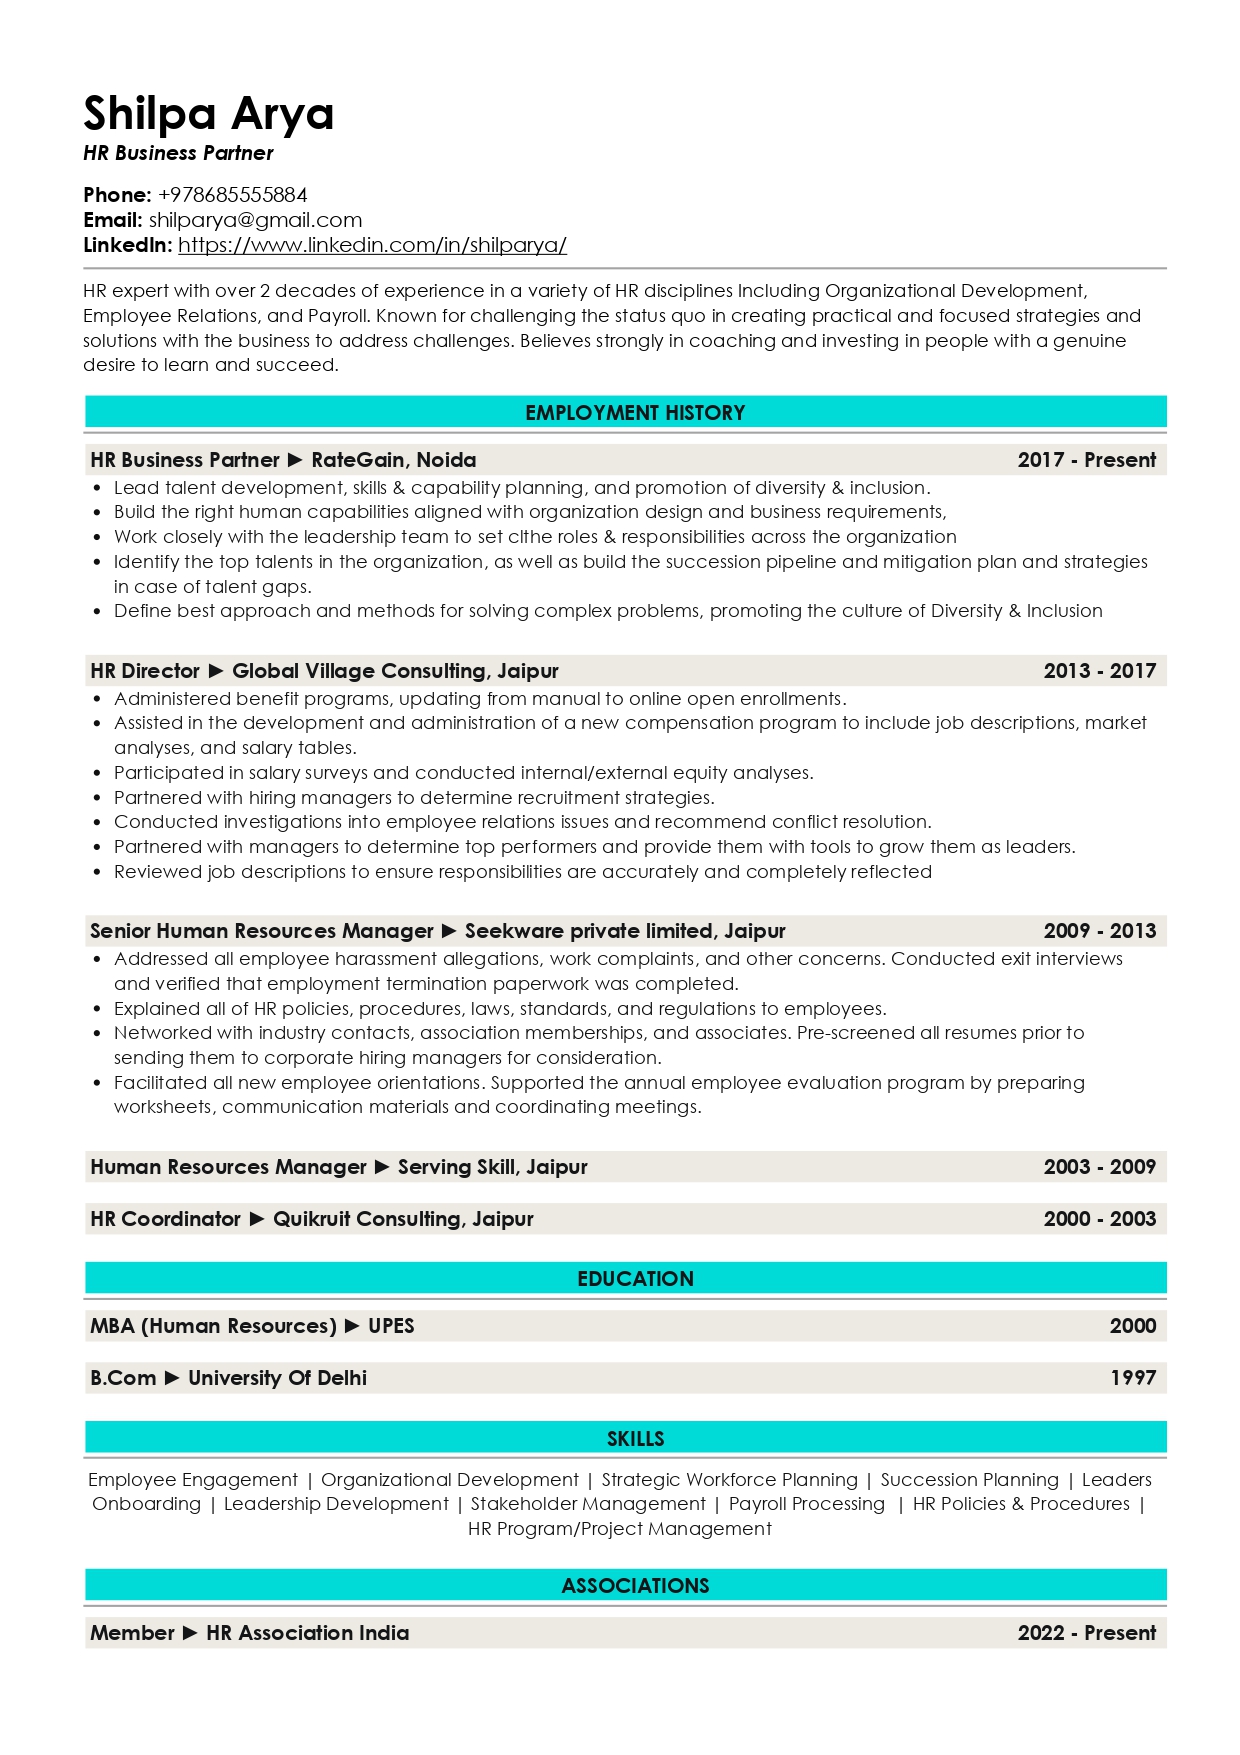 Resume of HR Business Partner (HRBP)